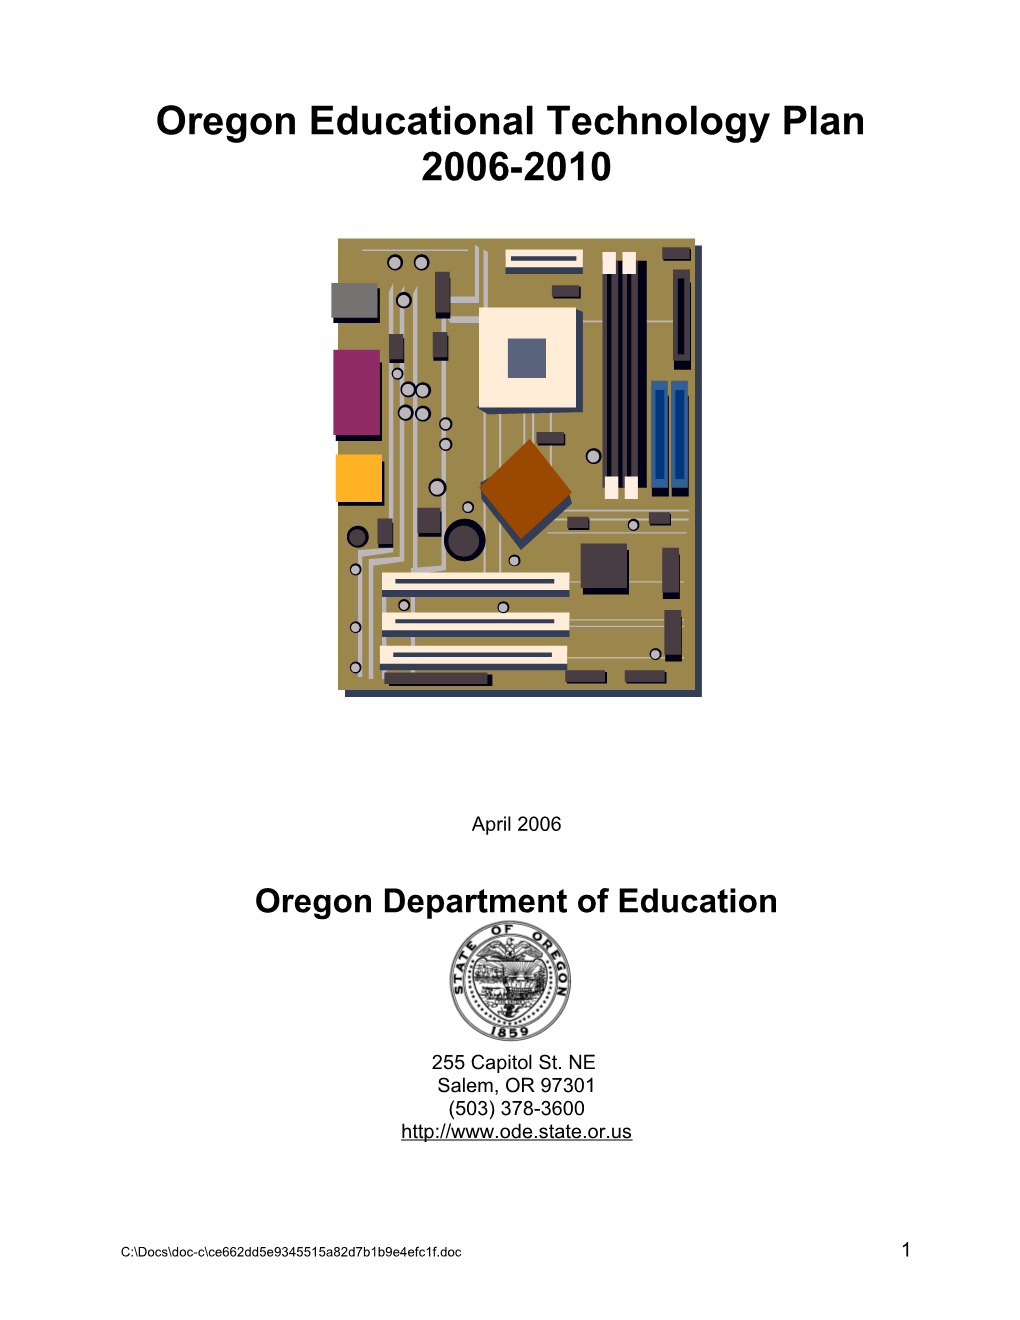 Oregon Educational Technology Plan (OETP)